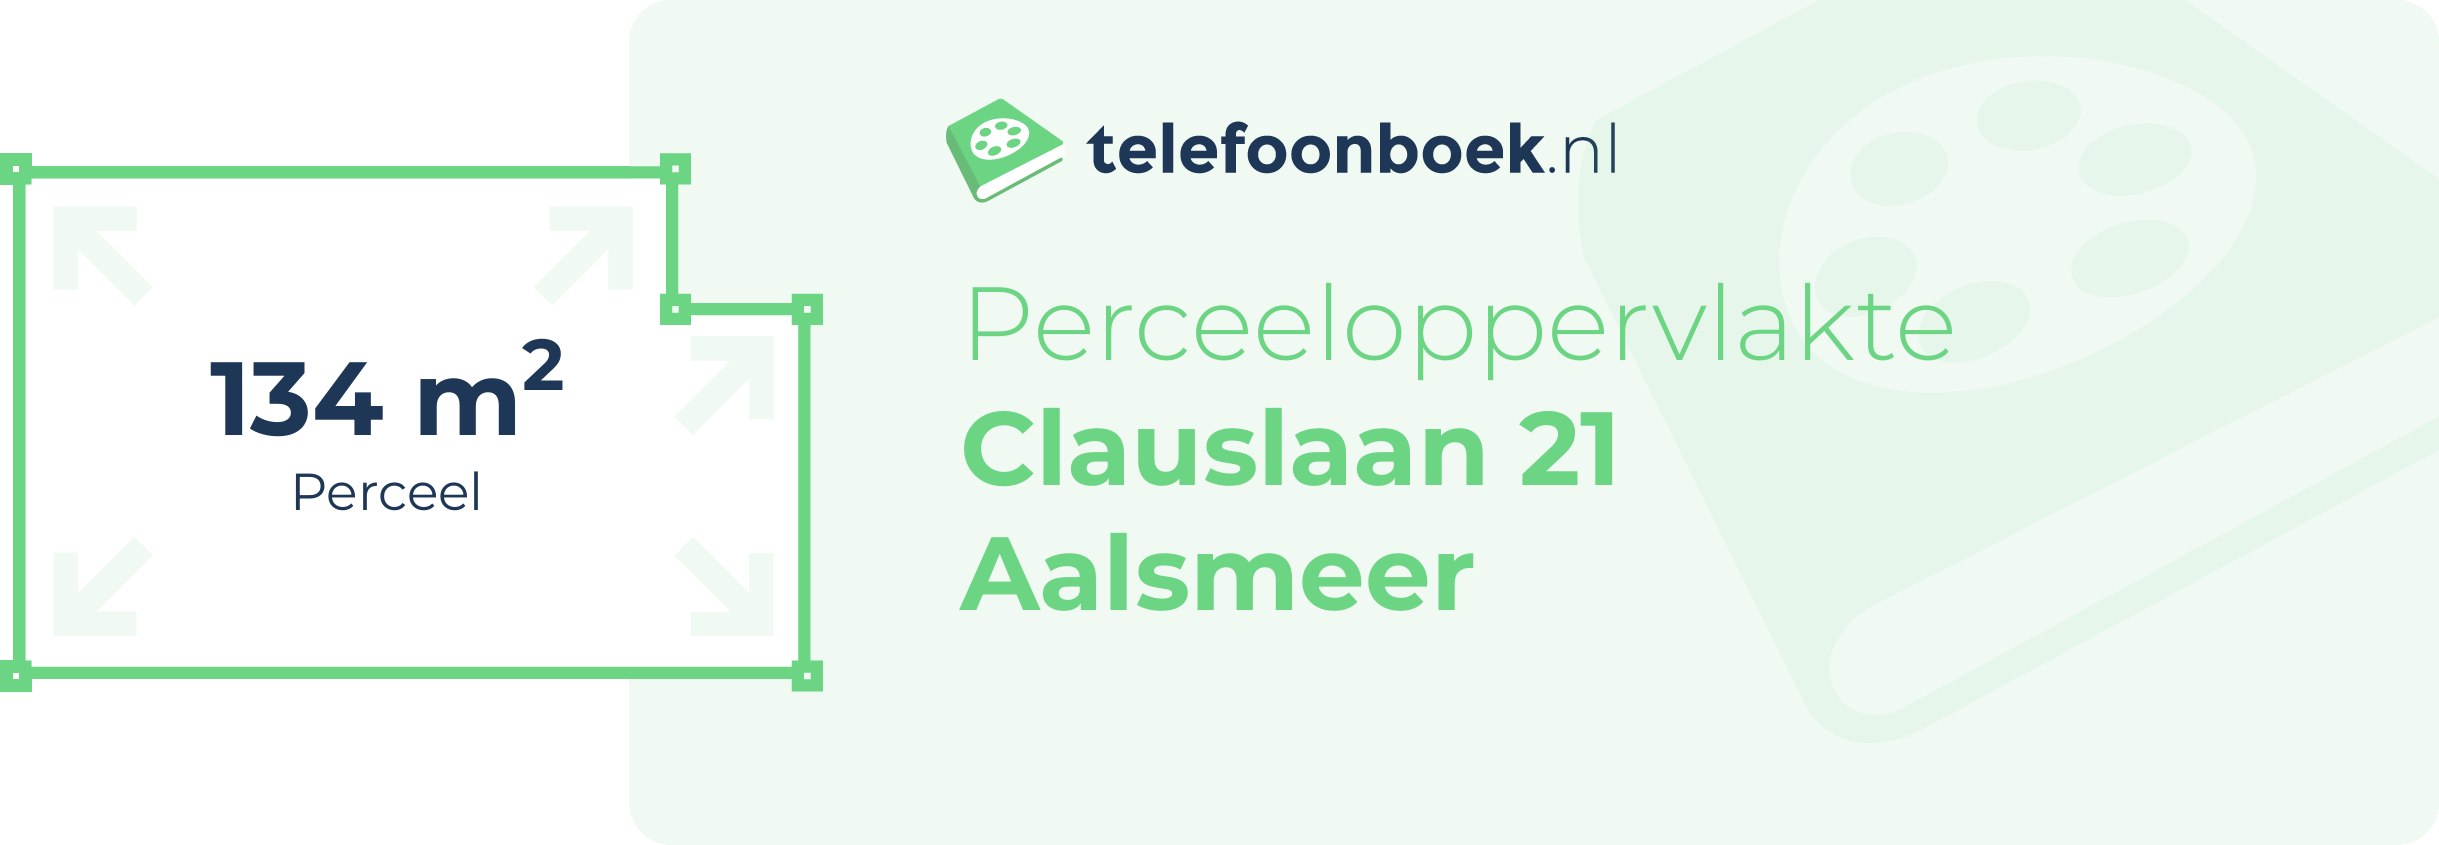 Perceeloppervlakte Clauslaan 21 Aalsmeer